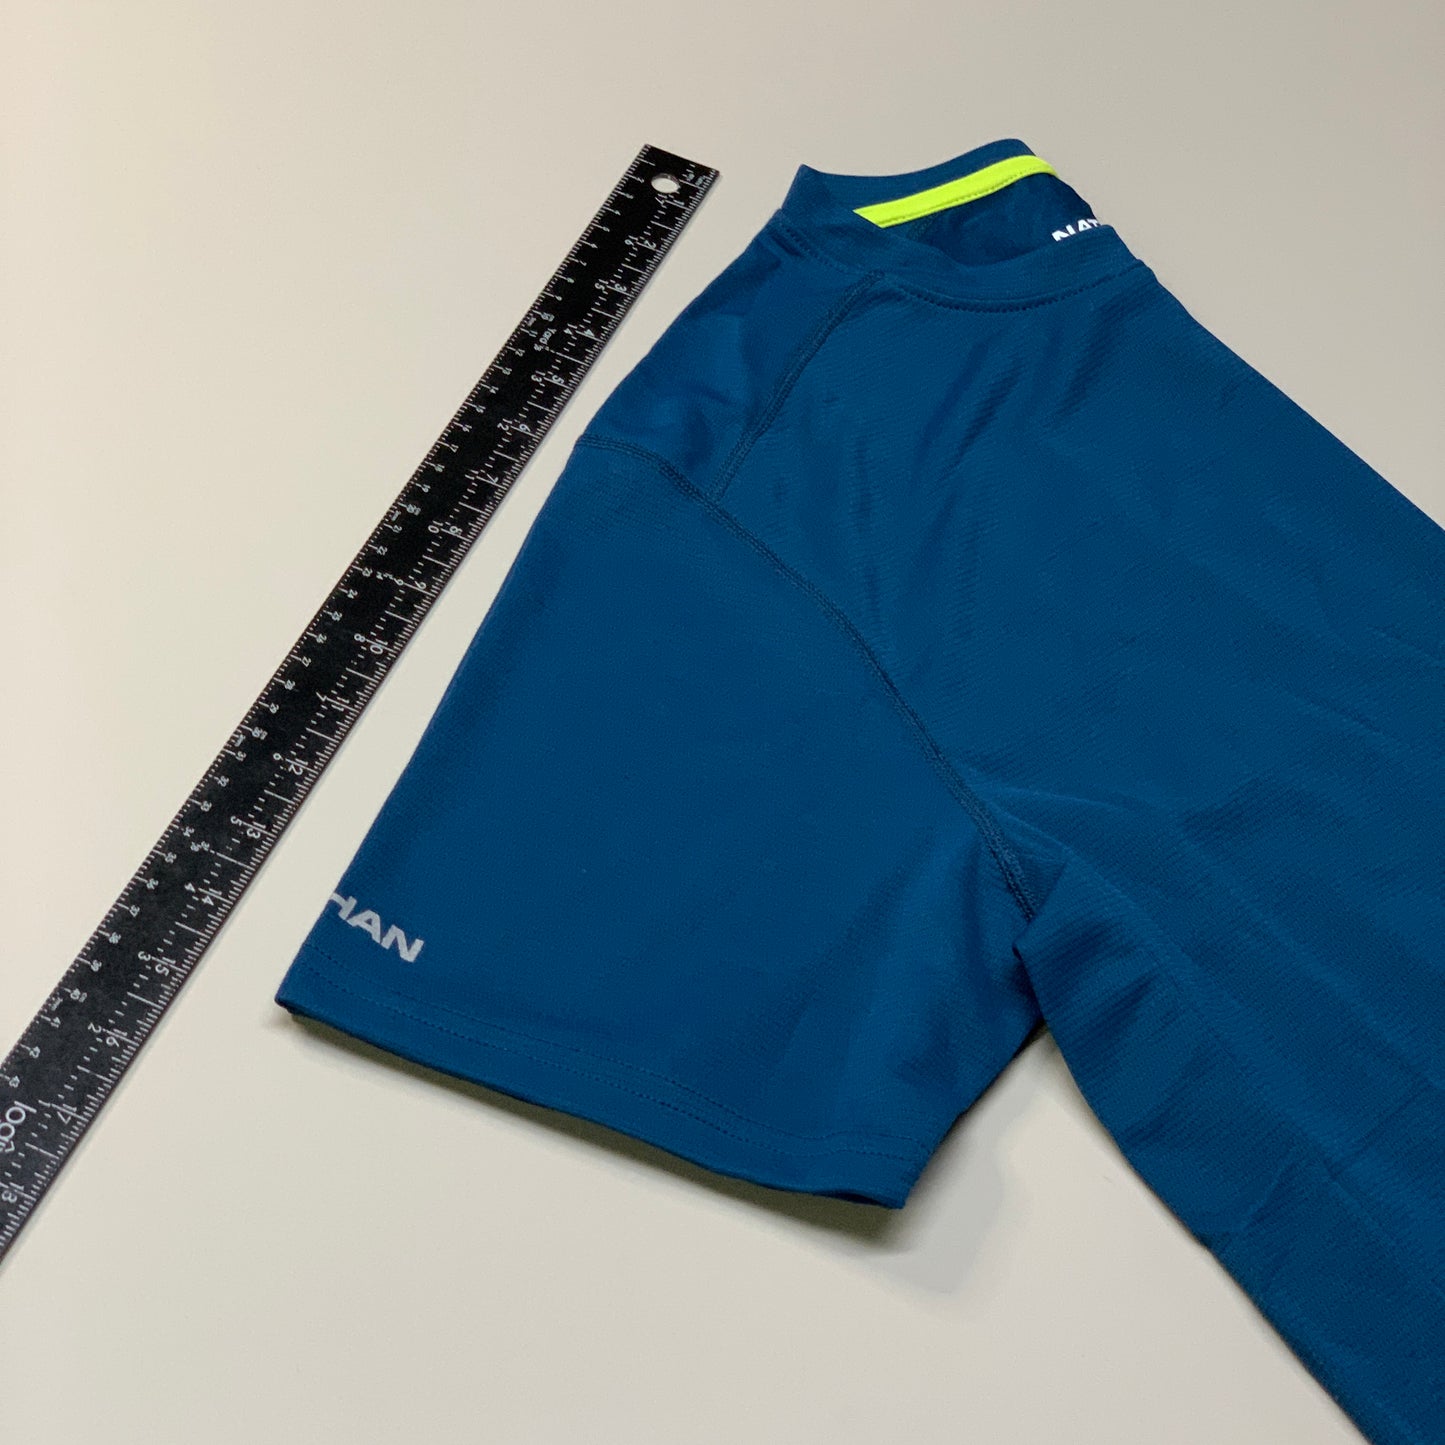 NATHAN Raise Short Sleeve Shirt Tee 2.0 Men's Sailor Blue Size L NS50880-60062-L